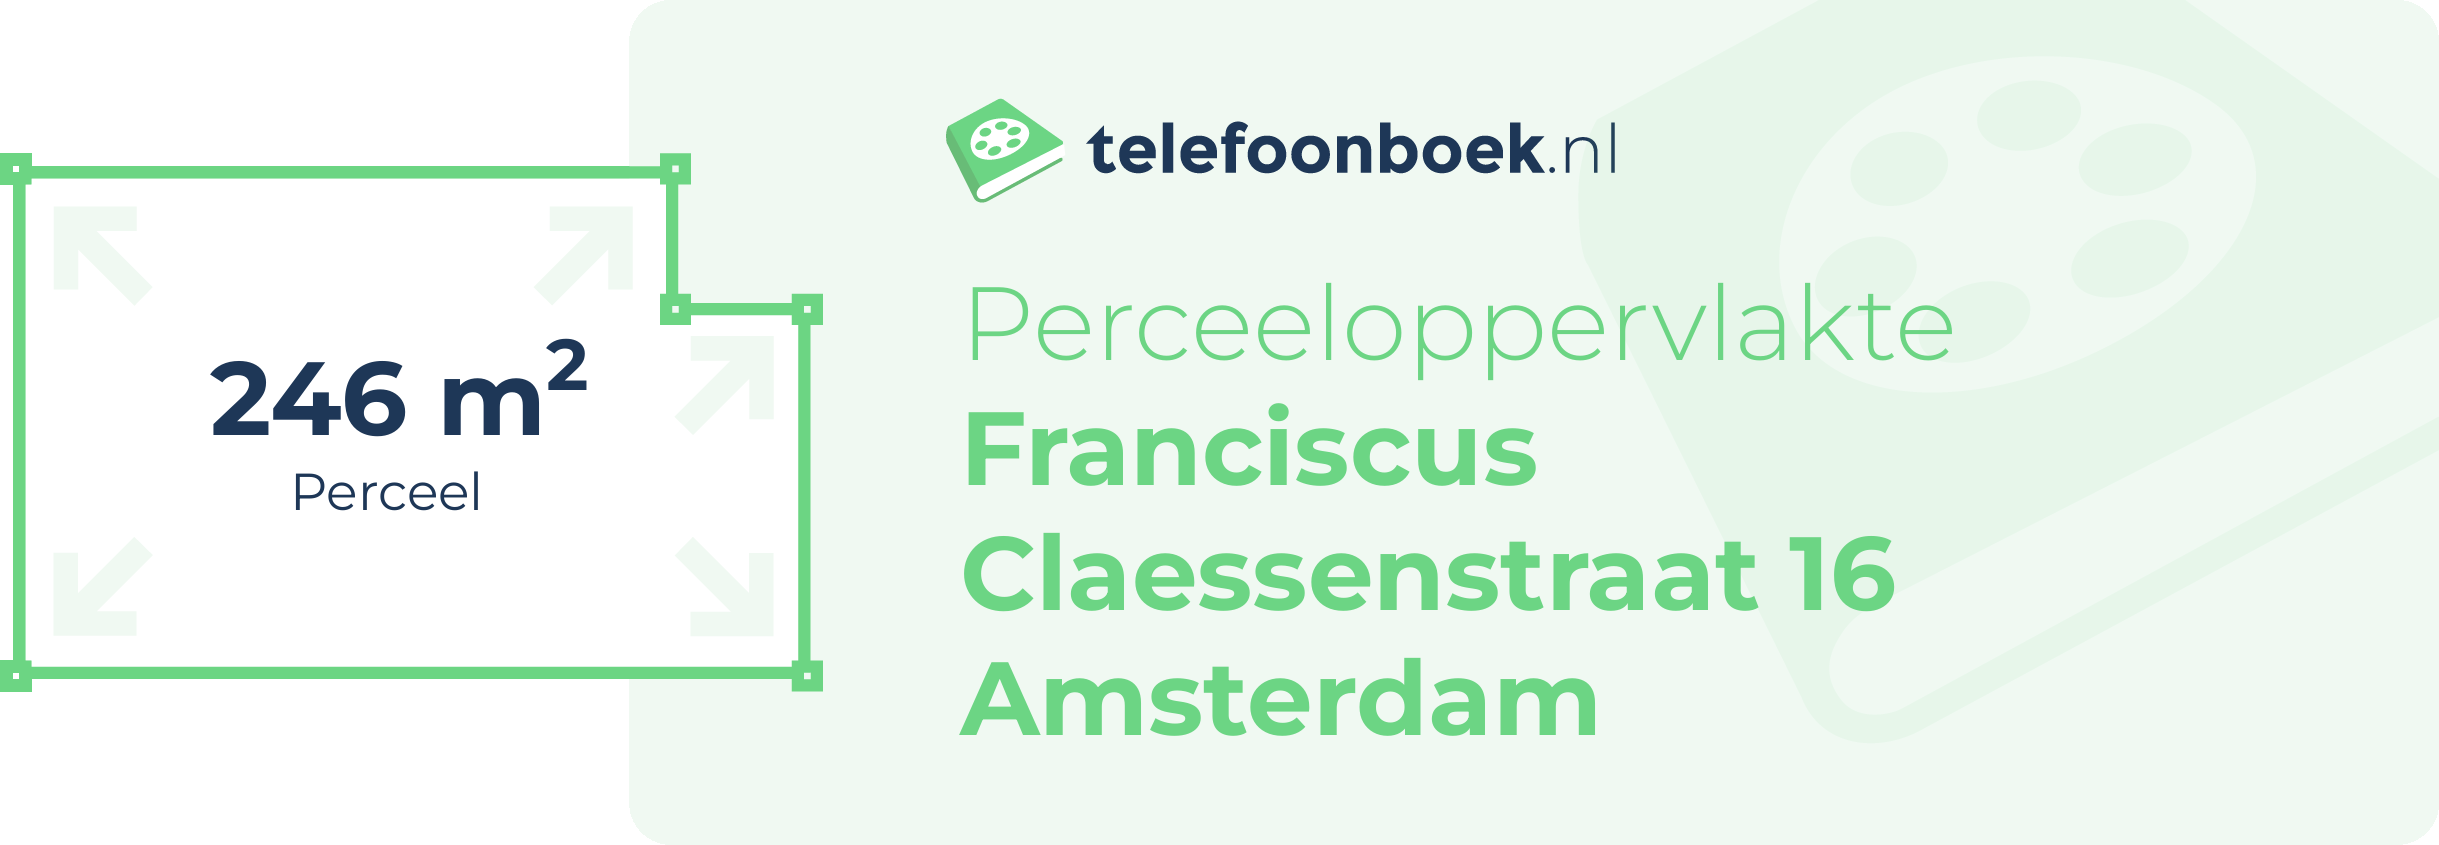 Perceeloppervlakte Franciscus Claessenstraat 16 Amsterdam